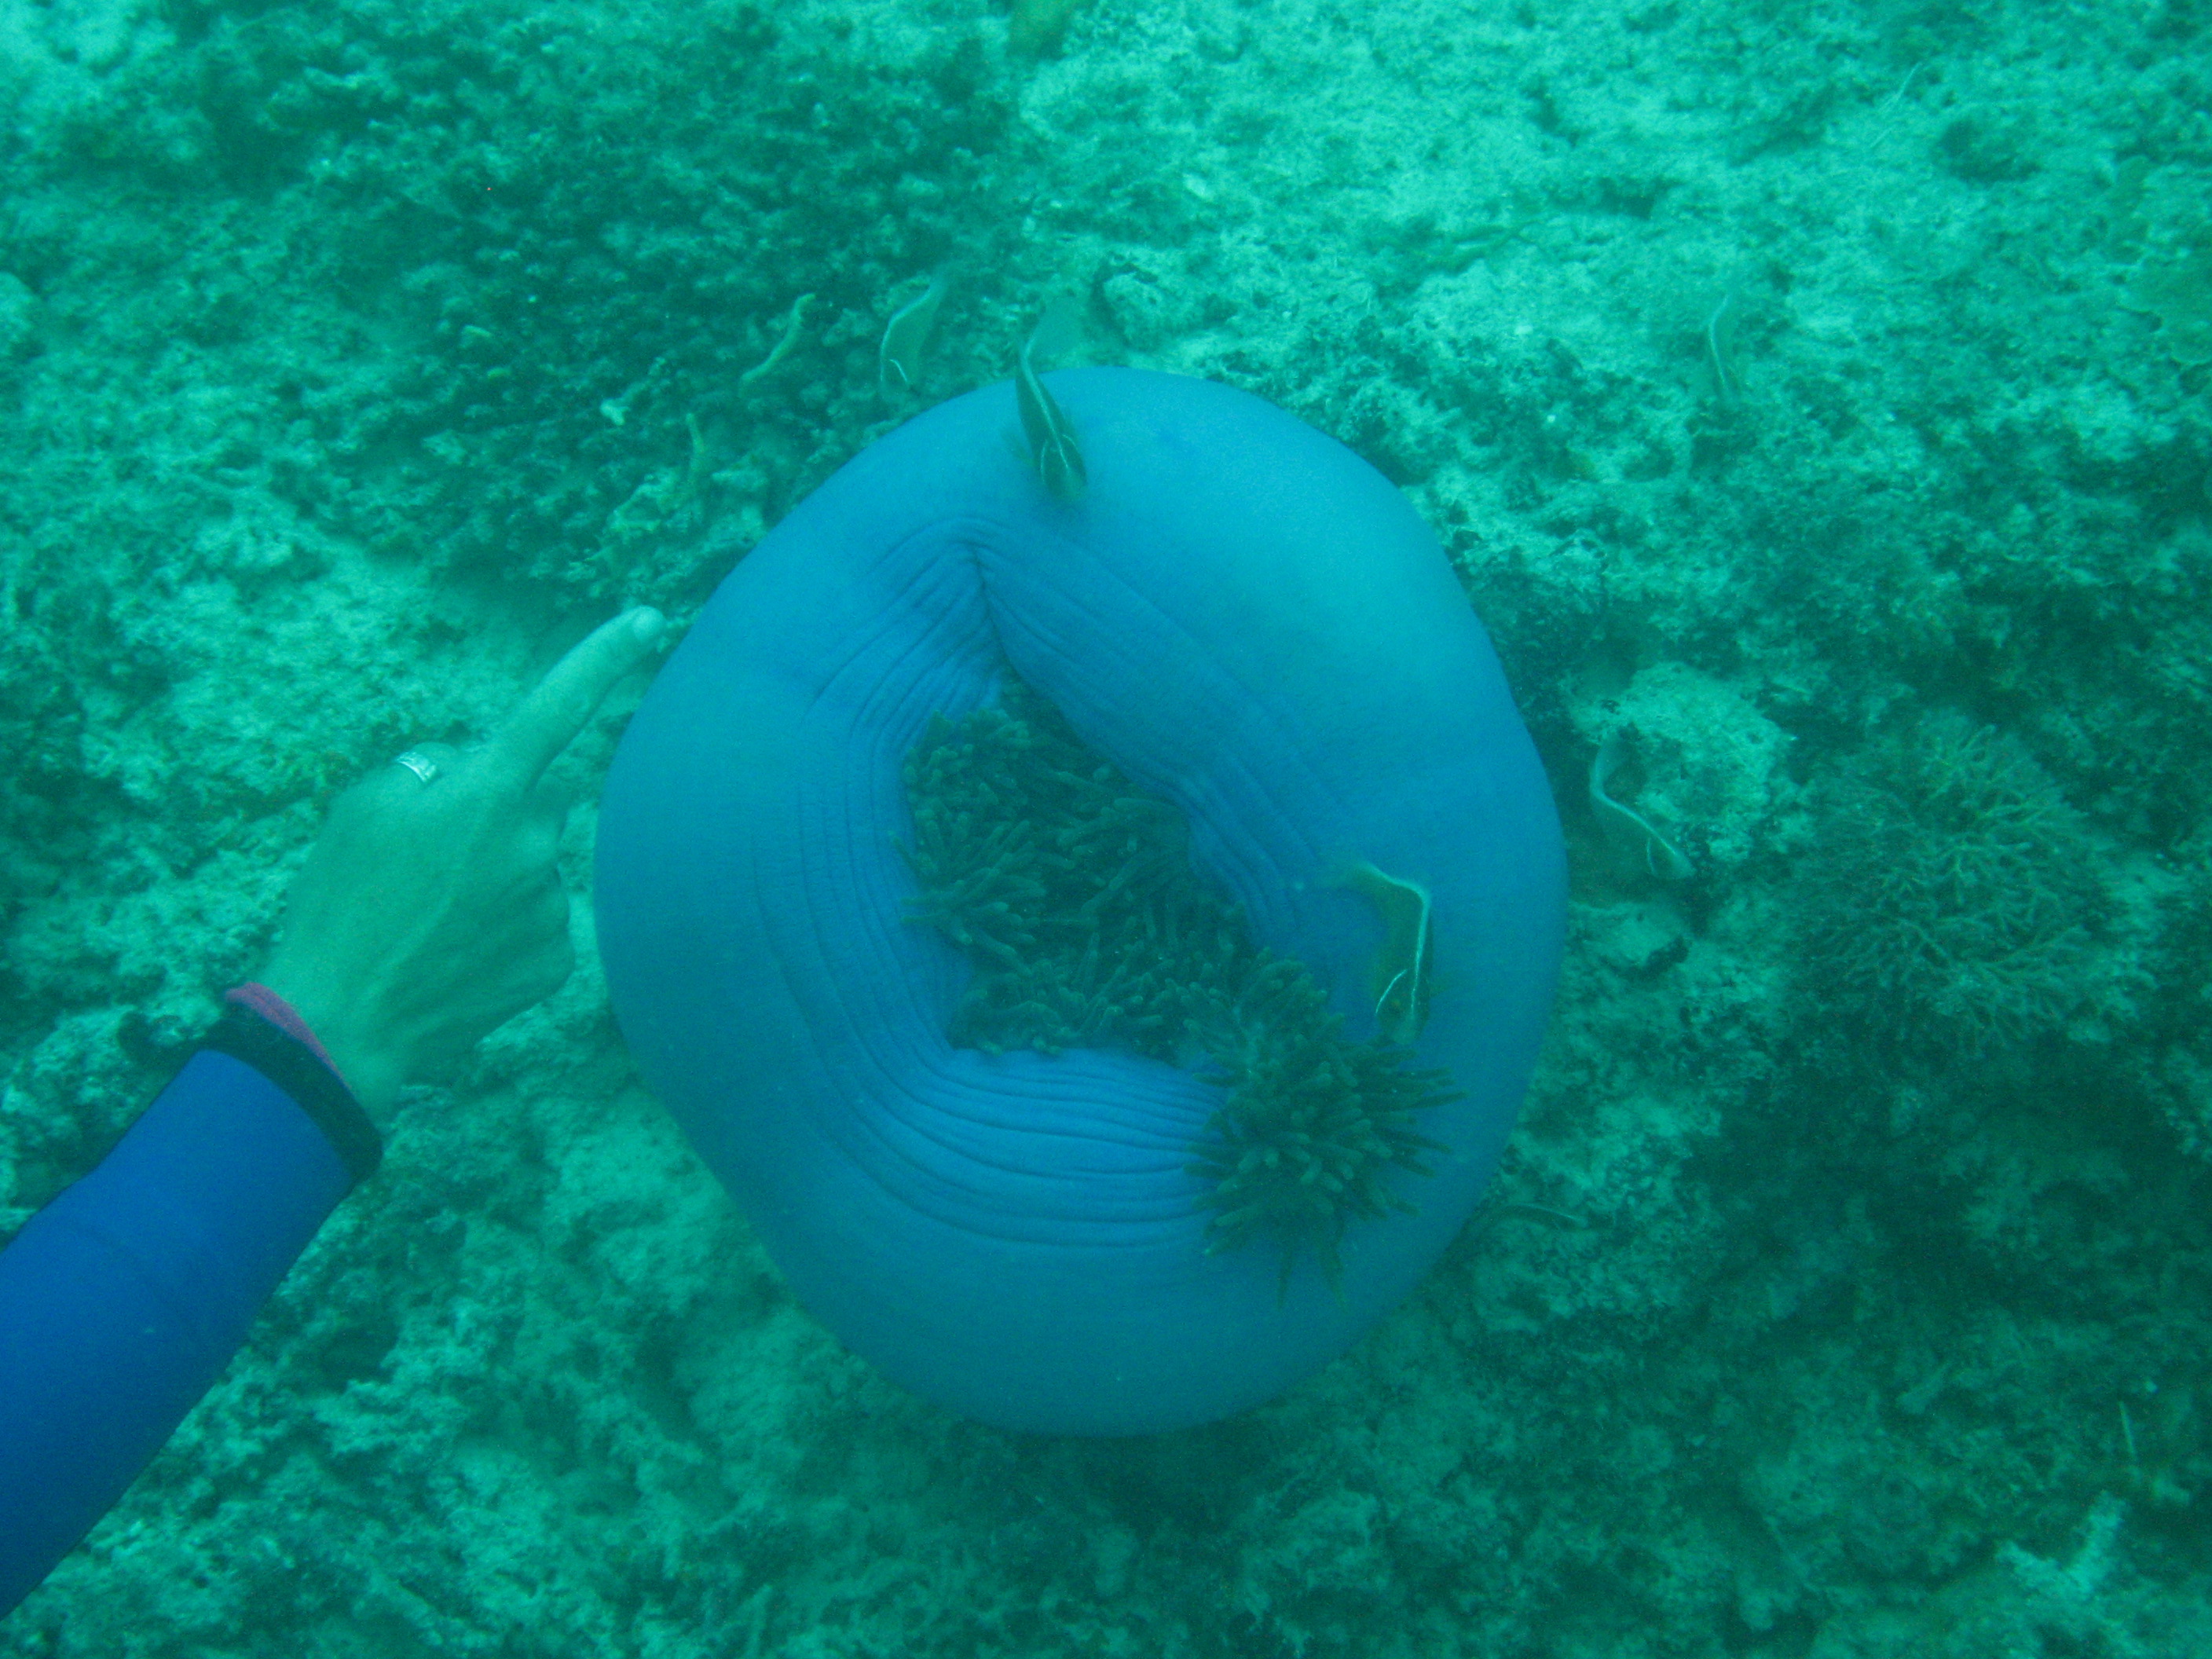 Anemone  eating something yummy - Great Barrer Reef